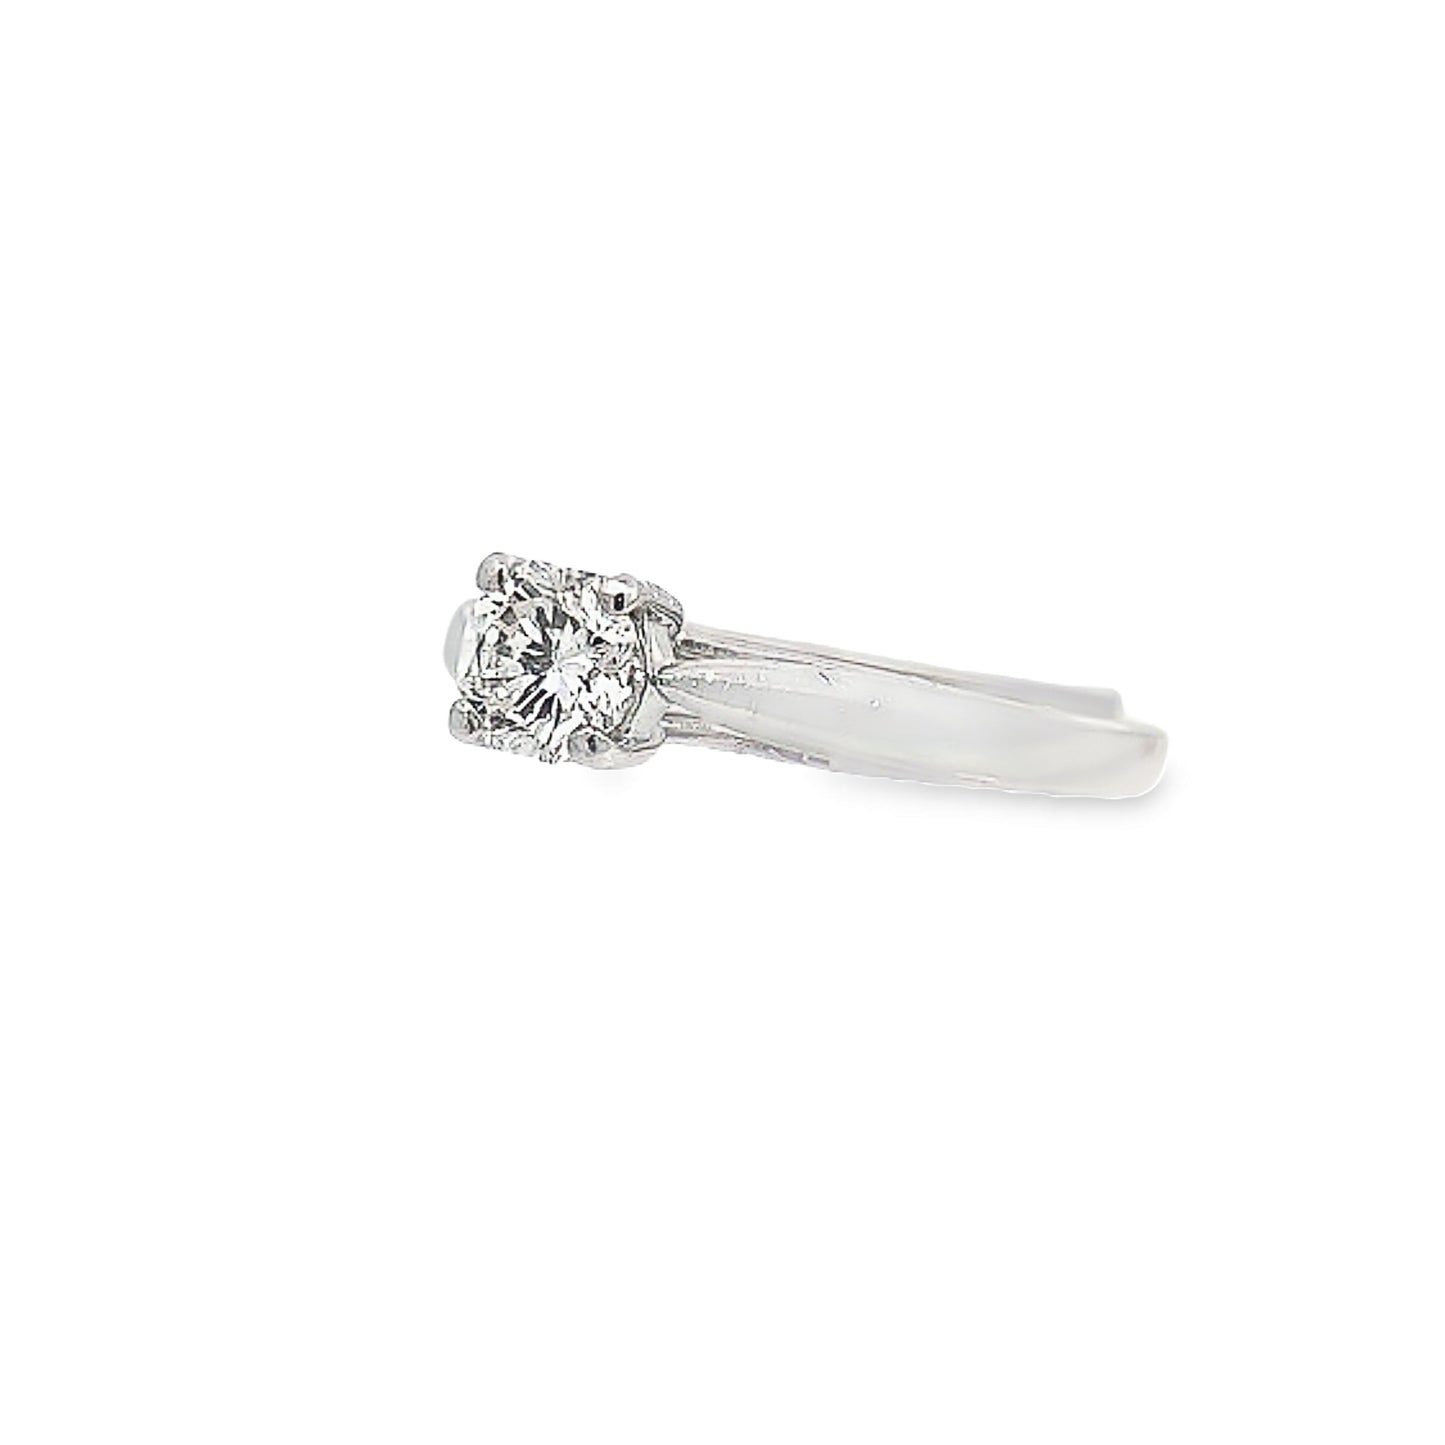 Platinum Solitaire Diamond Engagement Ring Size 7.25 2.6Dwt